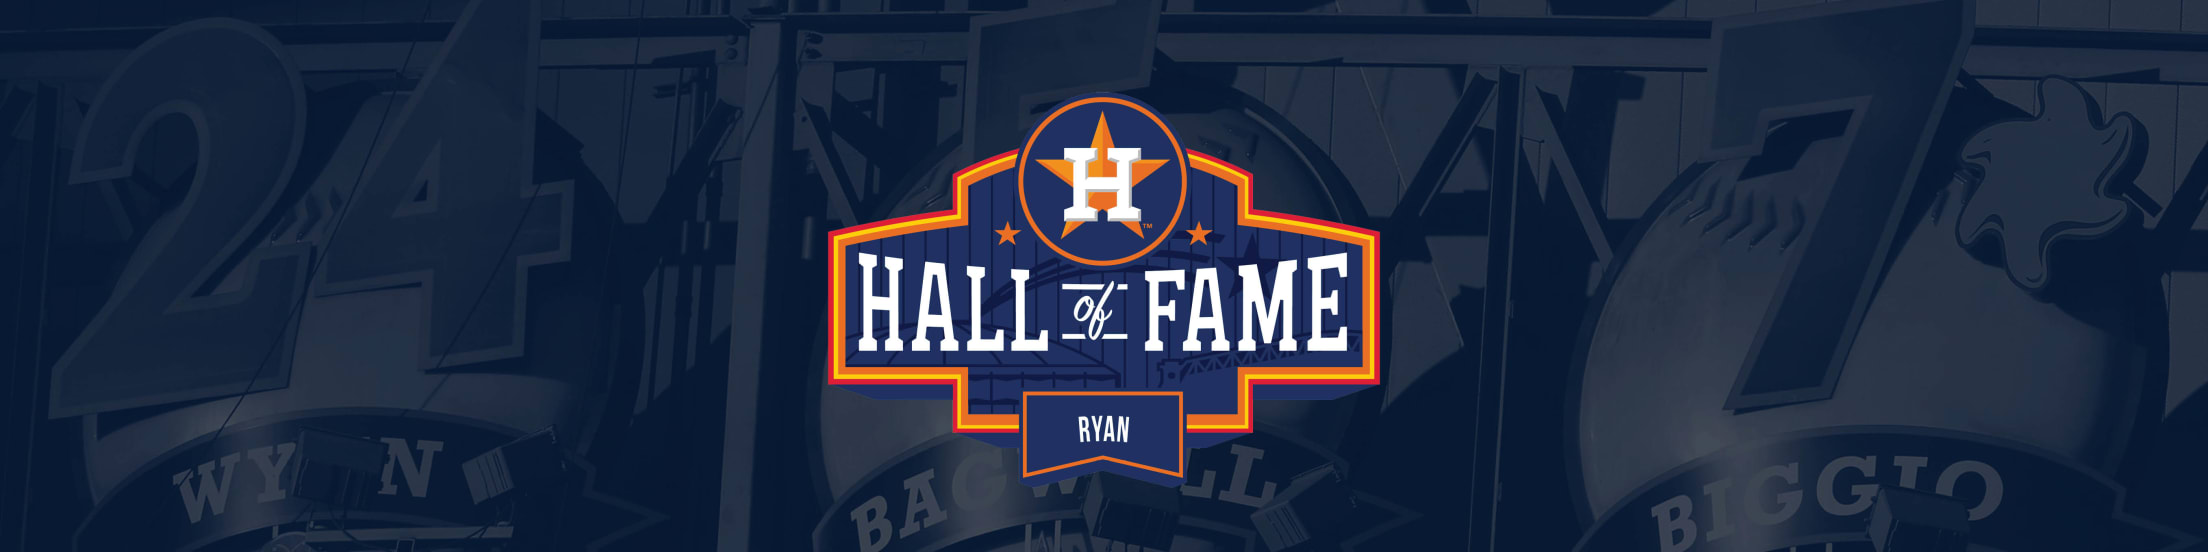 Nolan Ryan SGA Round Rock Express Hall Of Fame Inductee Plaque